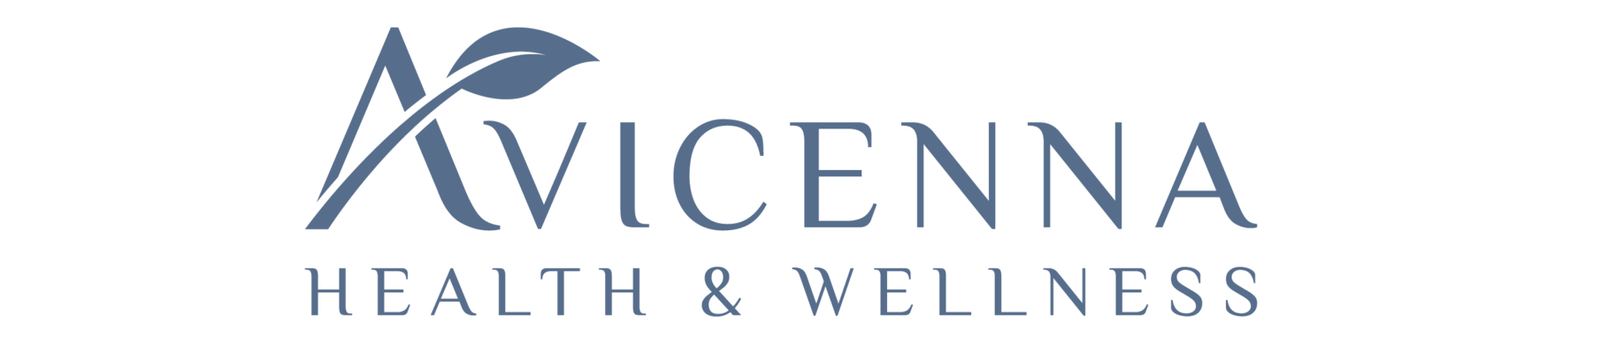 Avicenna Health & Wellness